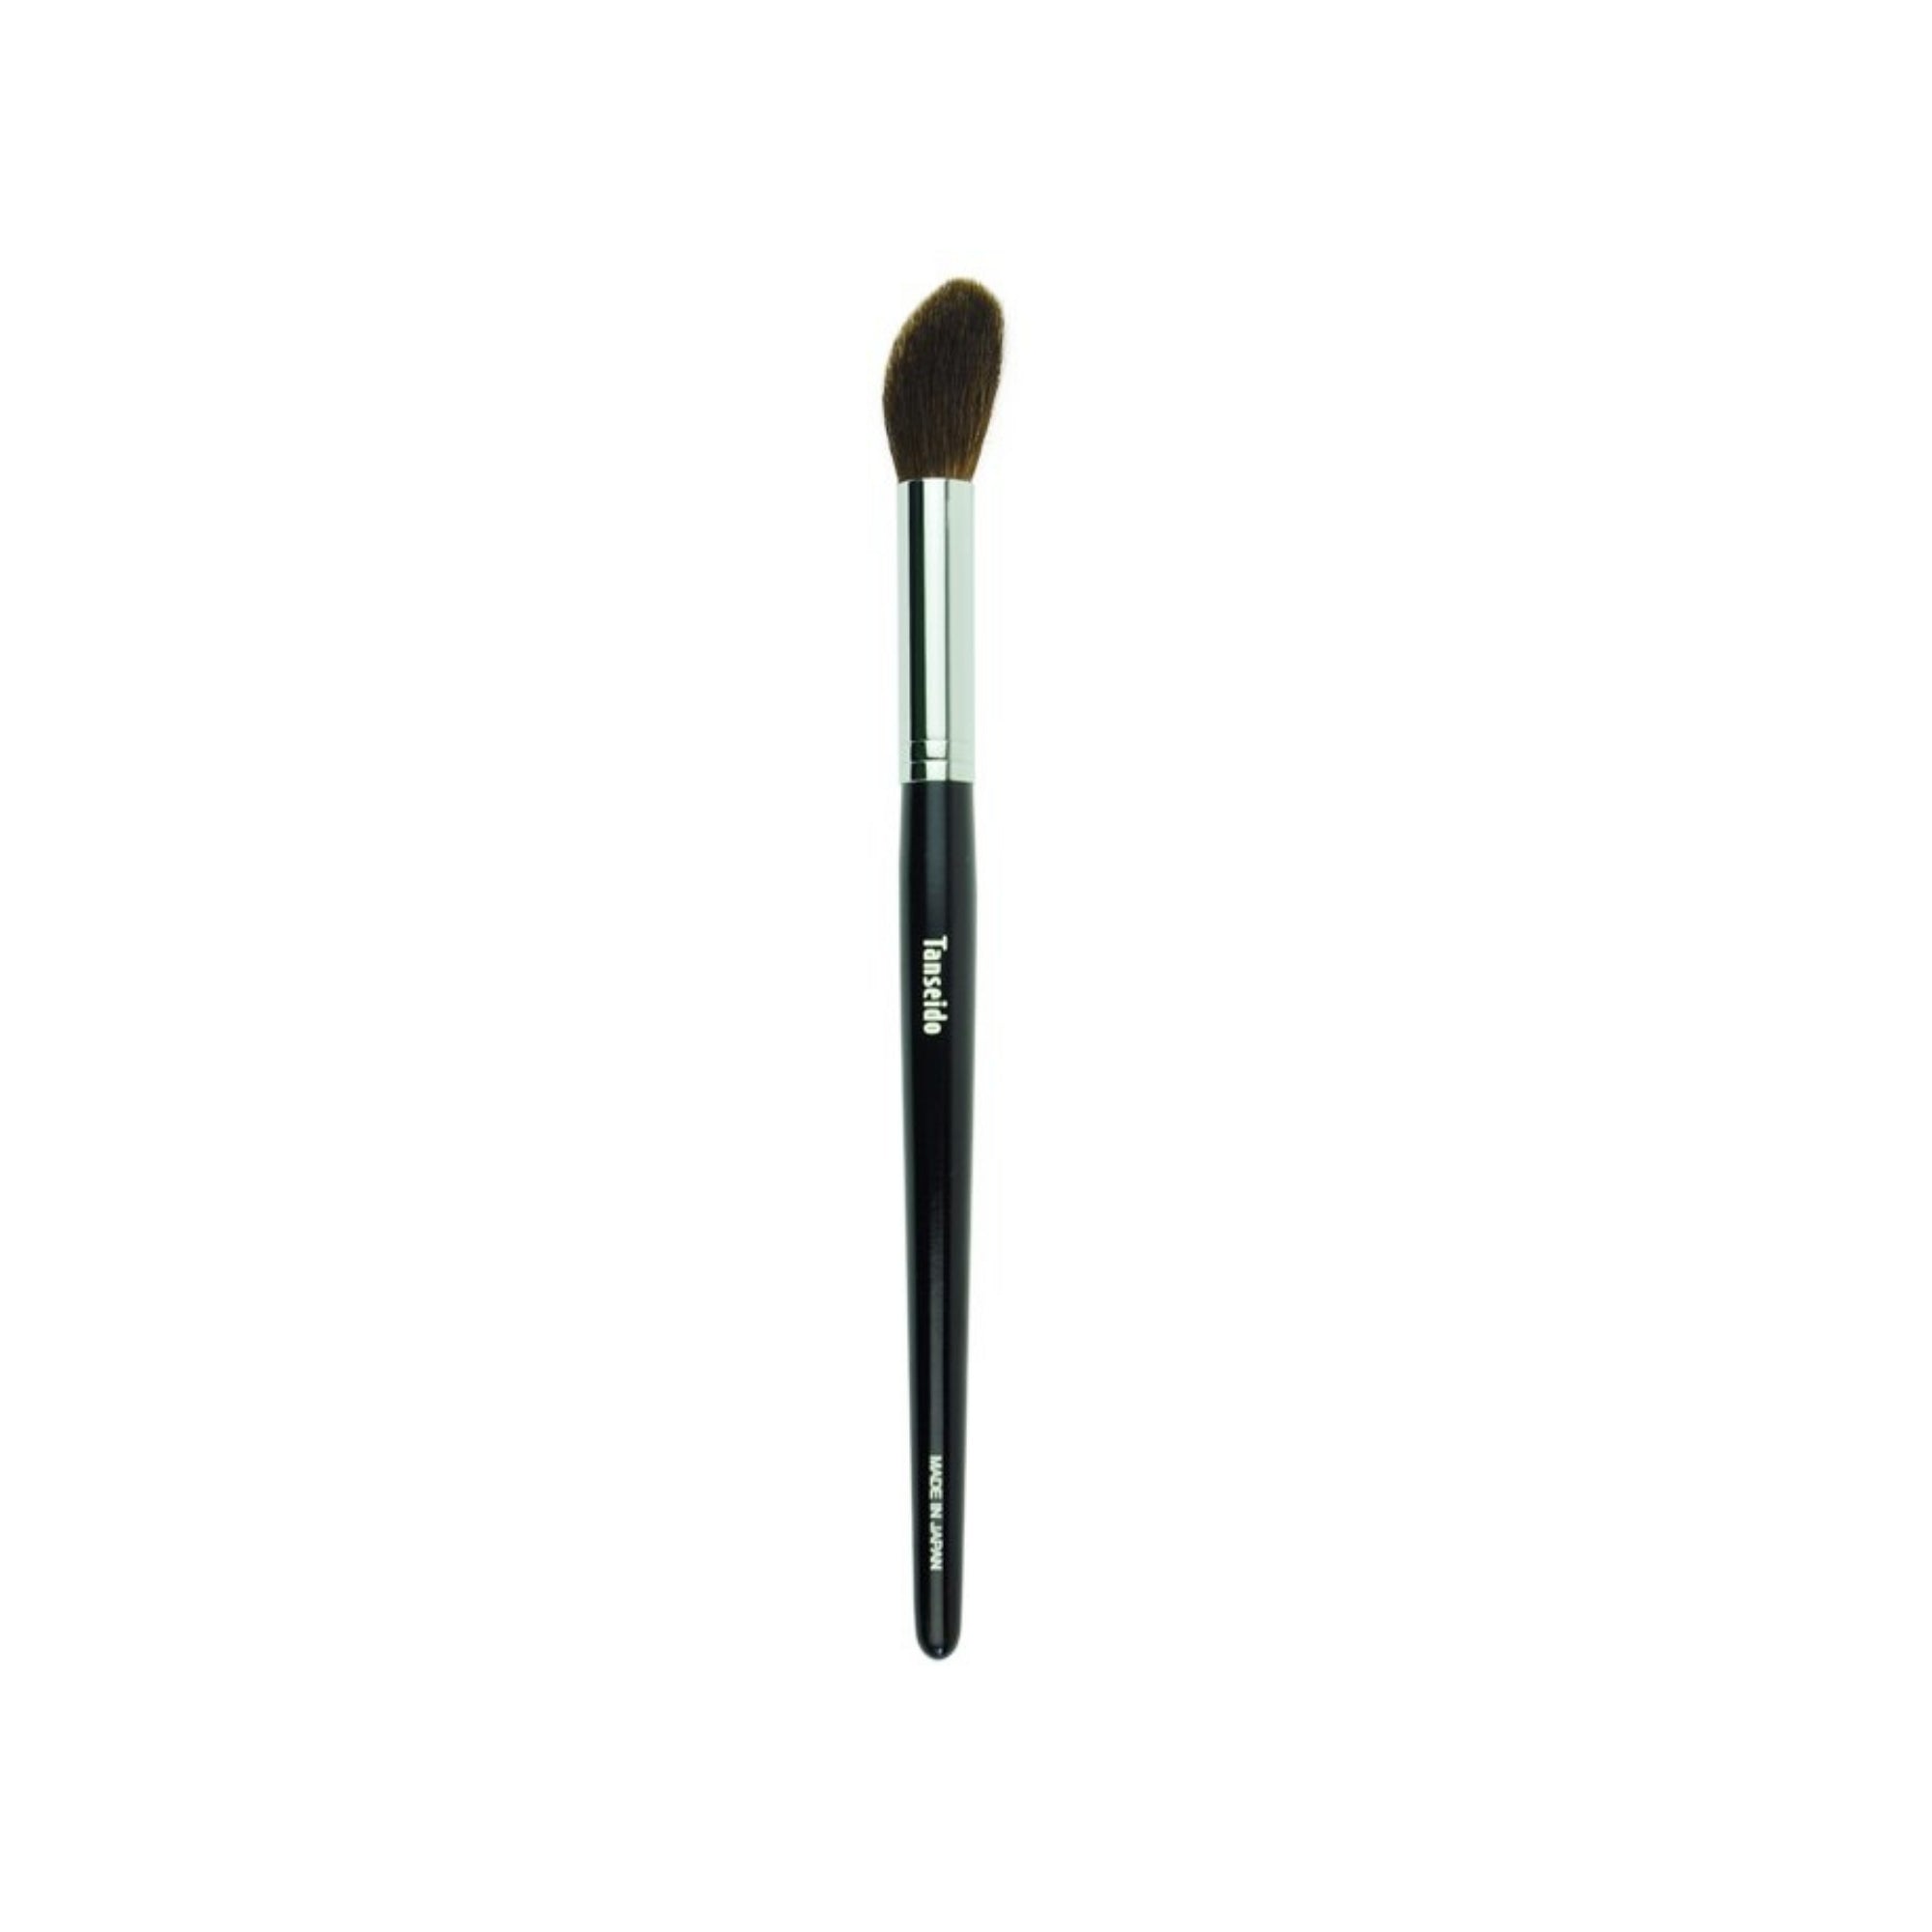 Tanseido YSS14 Highlight Brush - Fude Beauty, Japanese Makeup Brushes